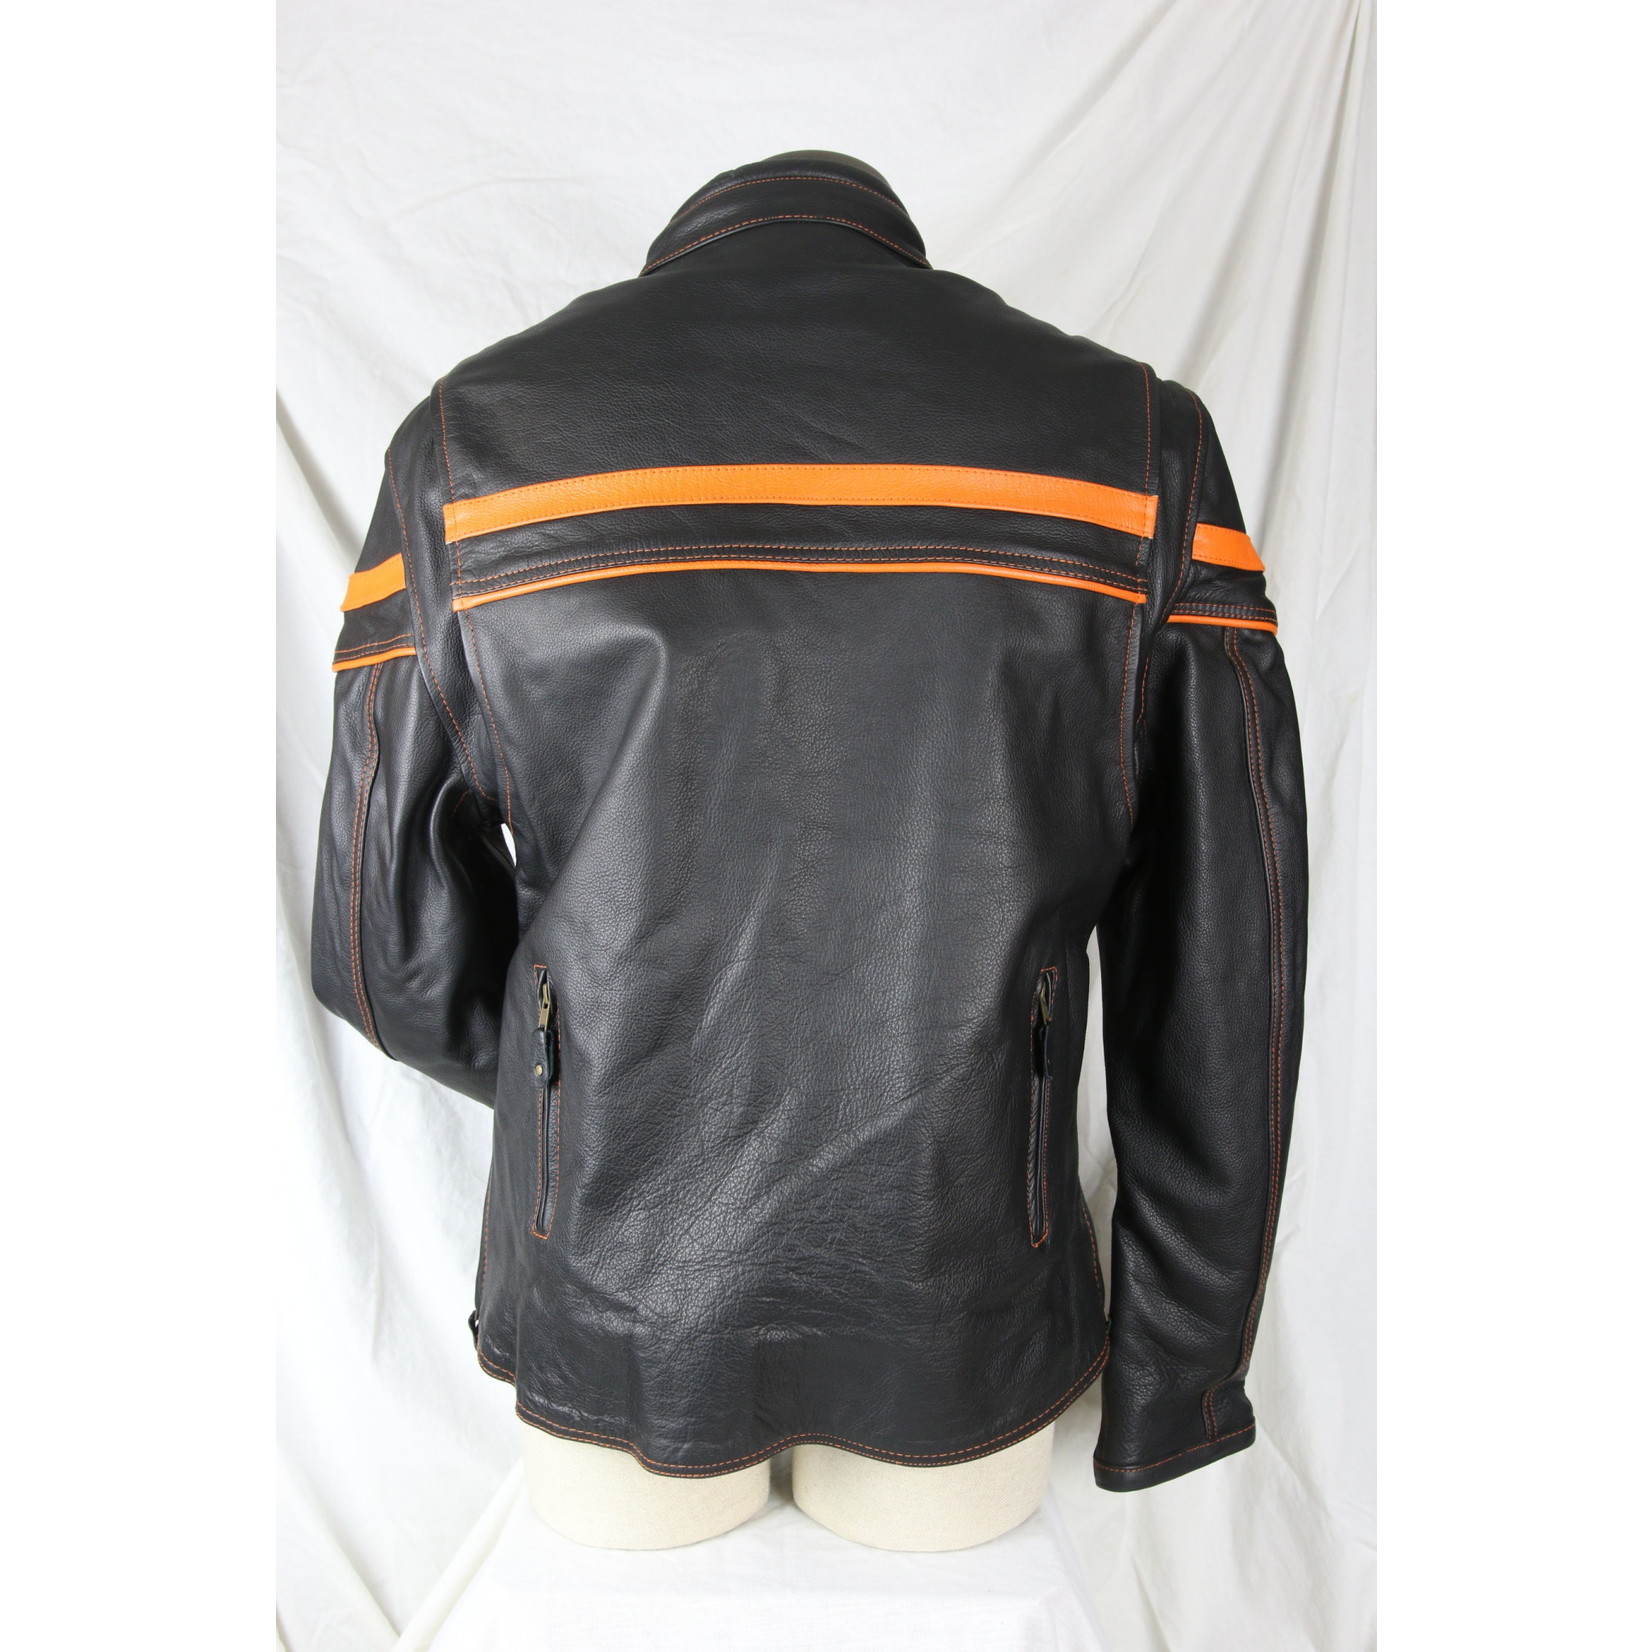 Dream Apparel Men’s Leather Biker Jacket Black with Orange Trim Removable Zip-Out Liner  Heavy